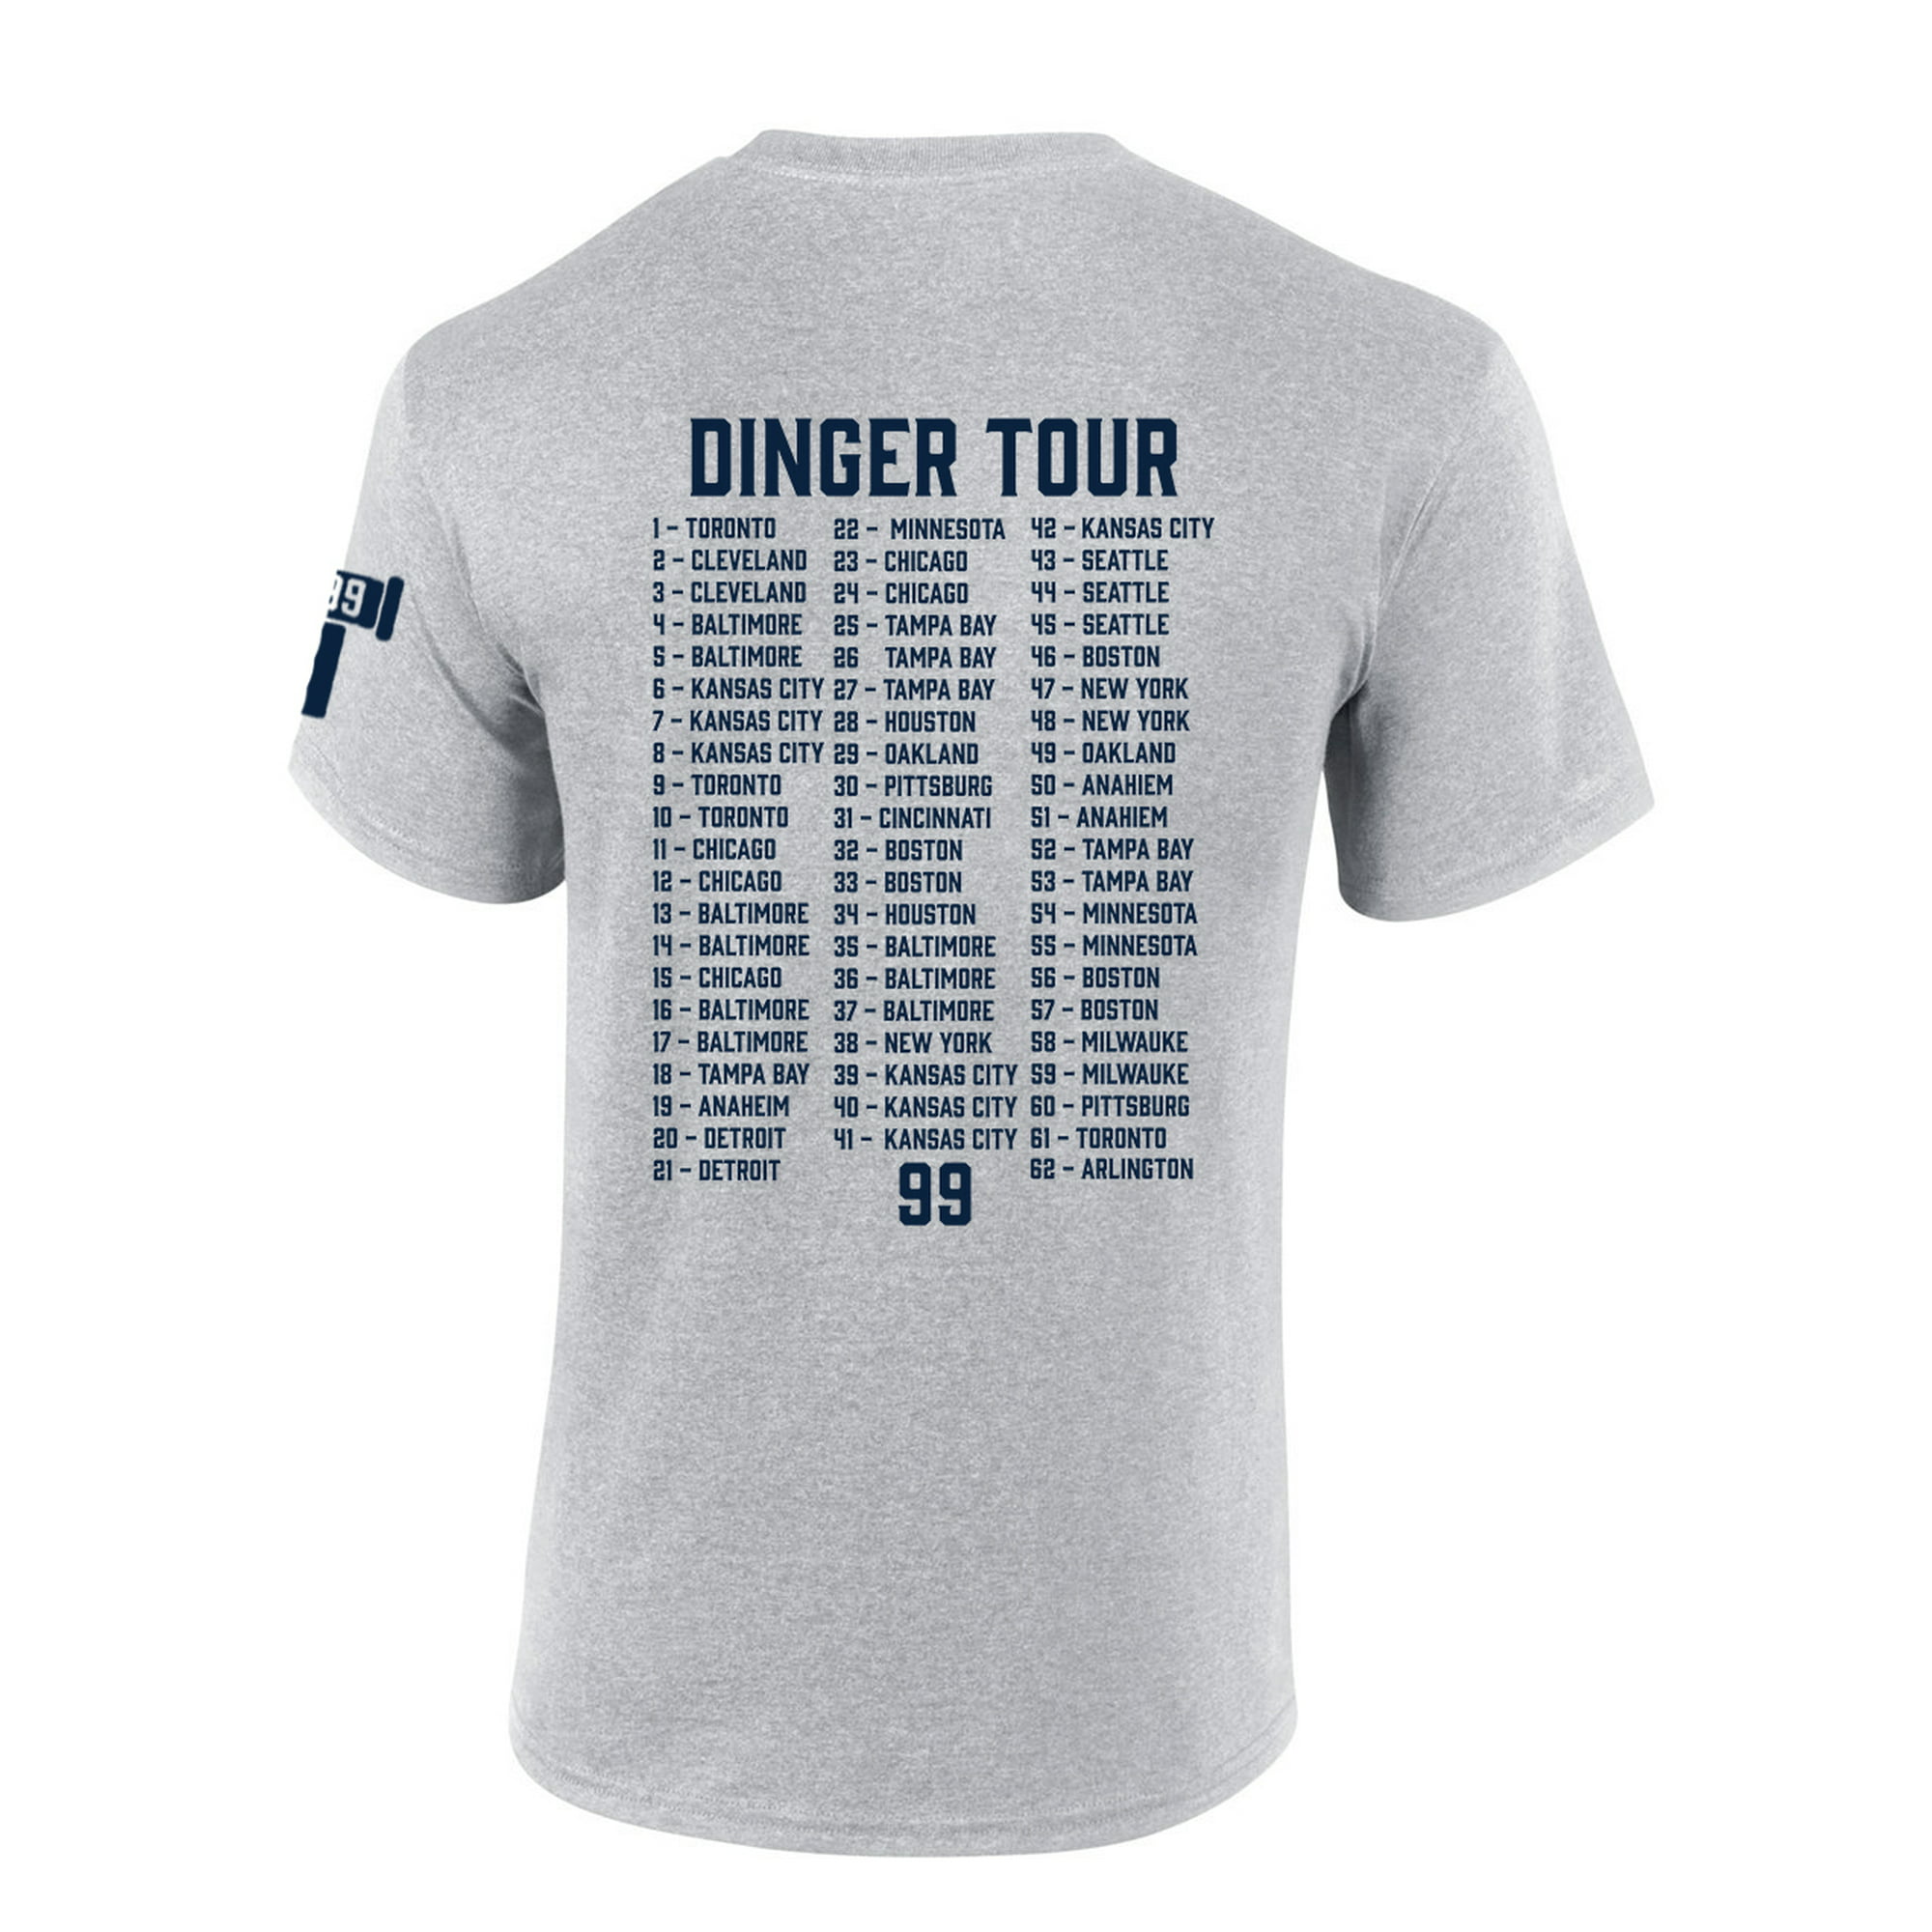 Washington DC Baseball City T-shirt